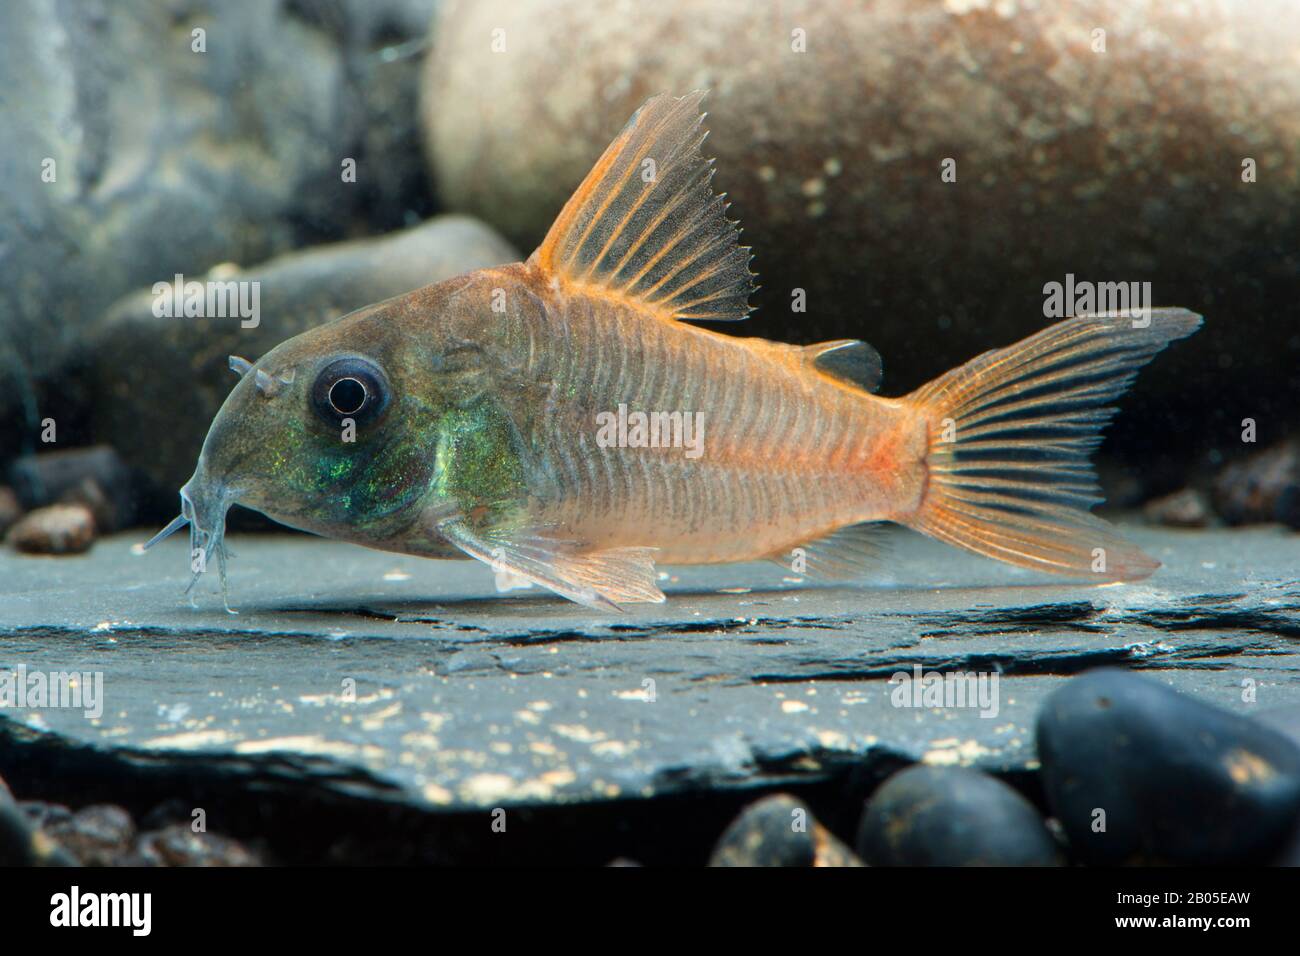 Corydoras catfish (Corydoras concolor), close to bottom, side view Stock Photo